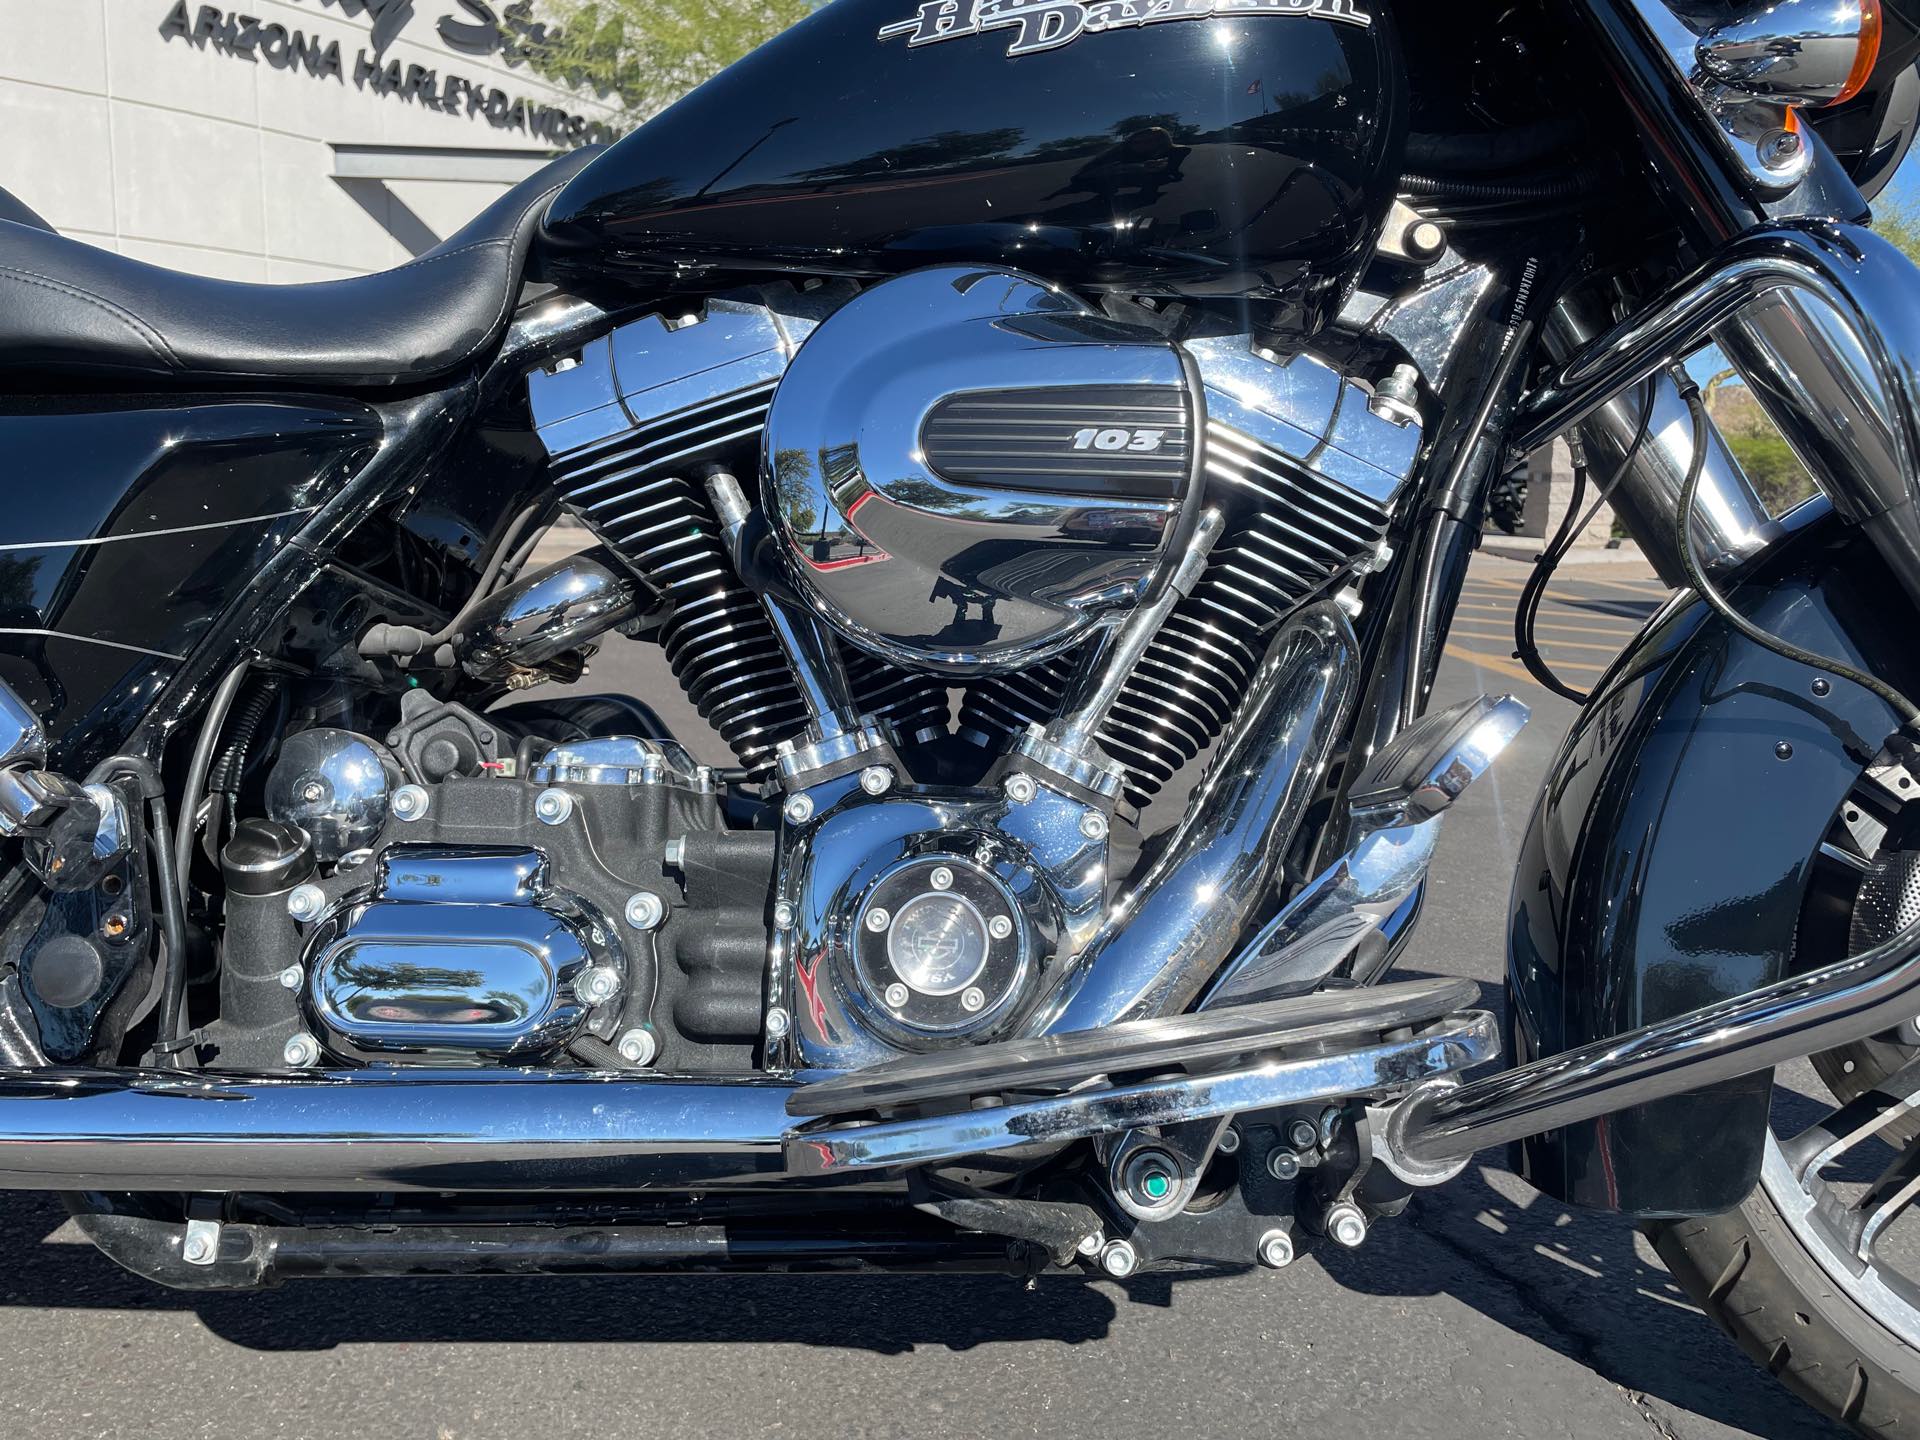 2015 Harley-Davidson Street Glide Special at Buddy Stubbs Arizona Harley-Davidson